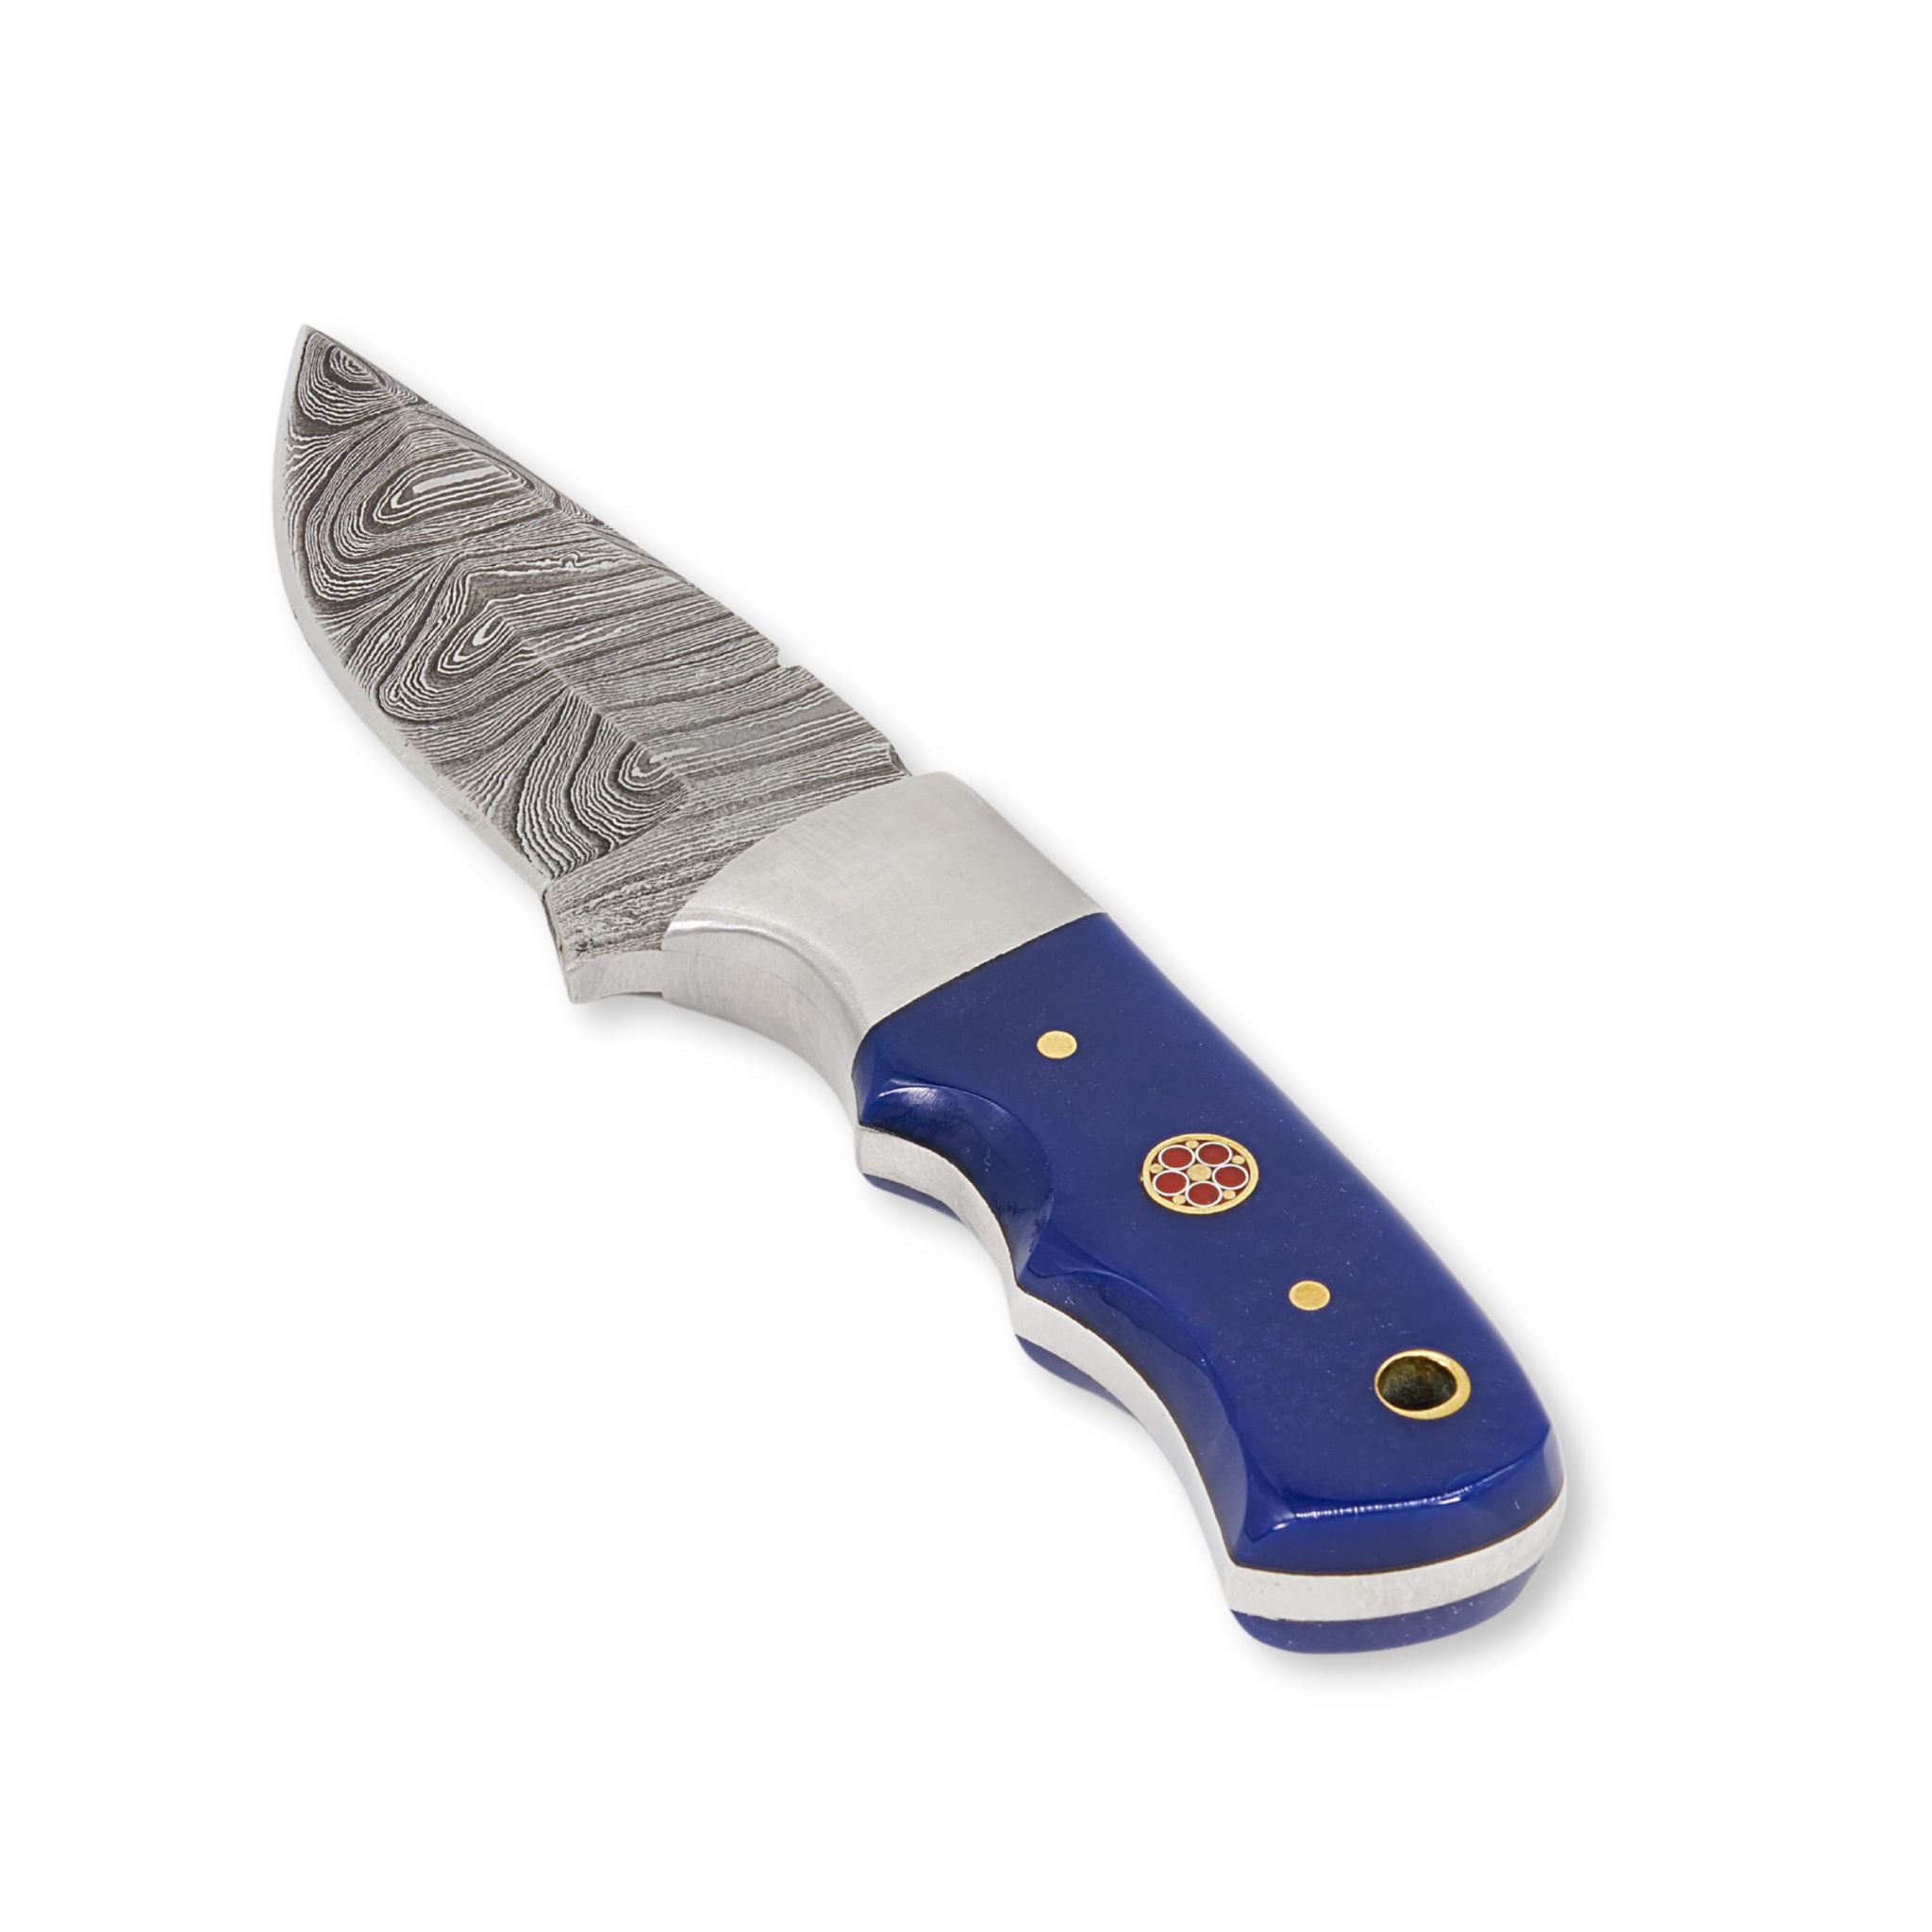 Natty Boon Handmade Skinner Knife Damascus Steel Blade Blue Resin Handle